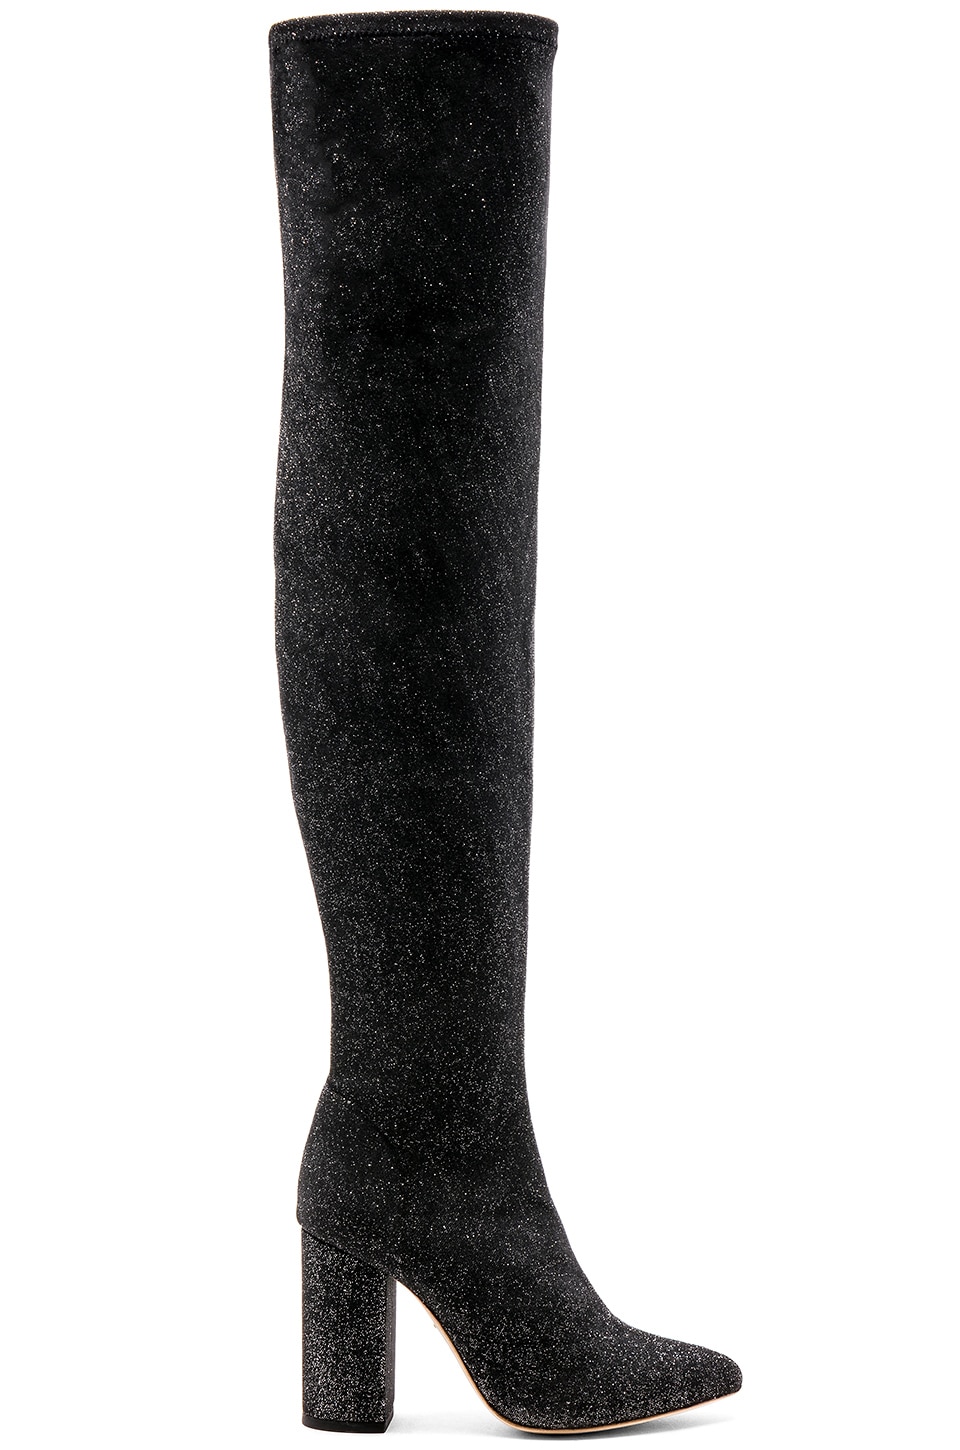 RAYE x REVOLVE Farley Boot in Black Glitter Stretch | REVOLVE